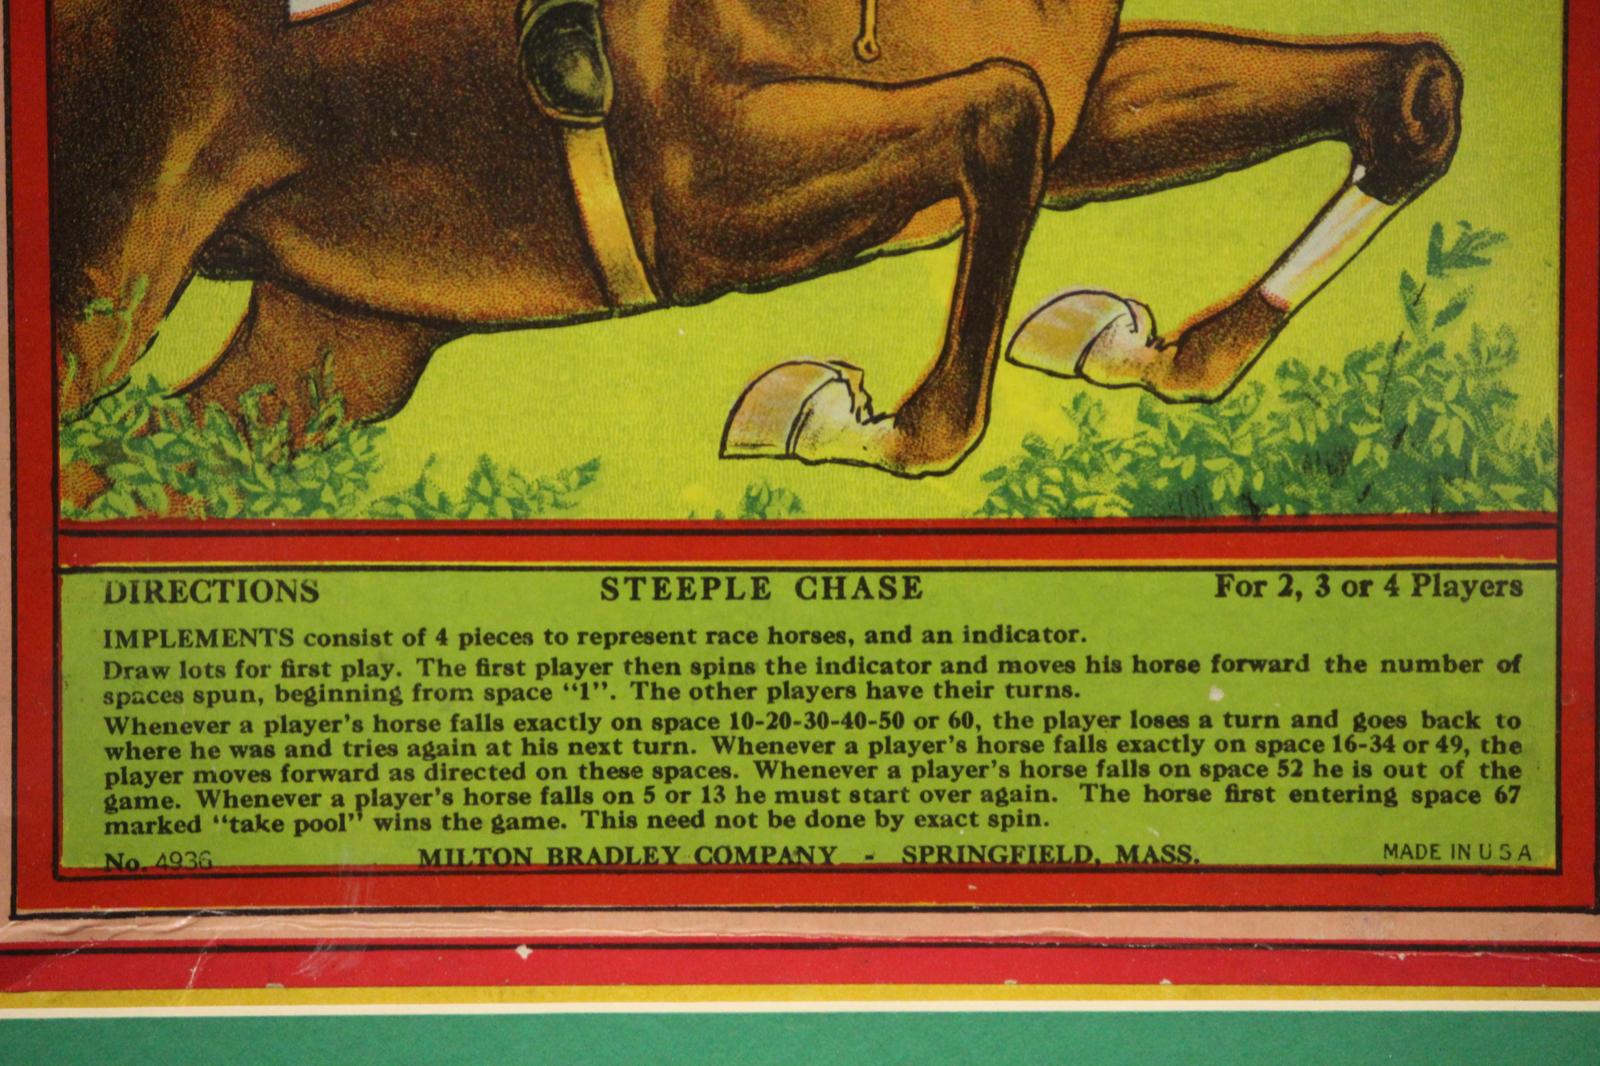 Original c1917 Milton Bradley 'Game of Steeple Chase'

Image Sz: 13 7/8